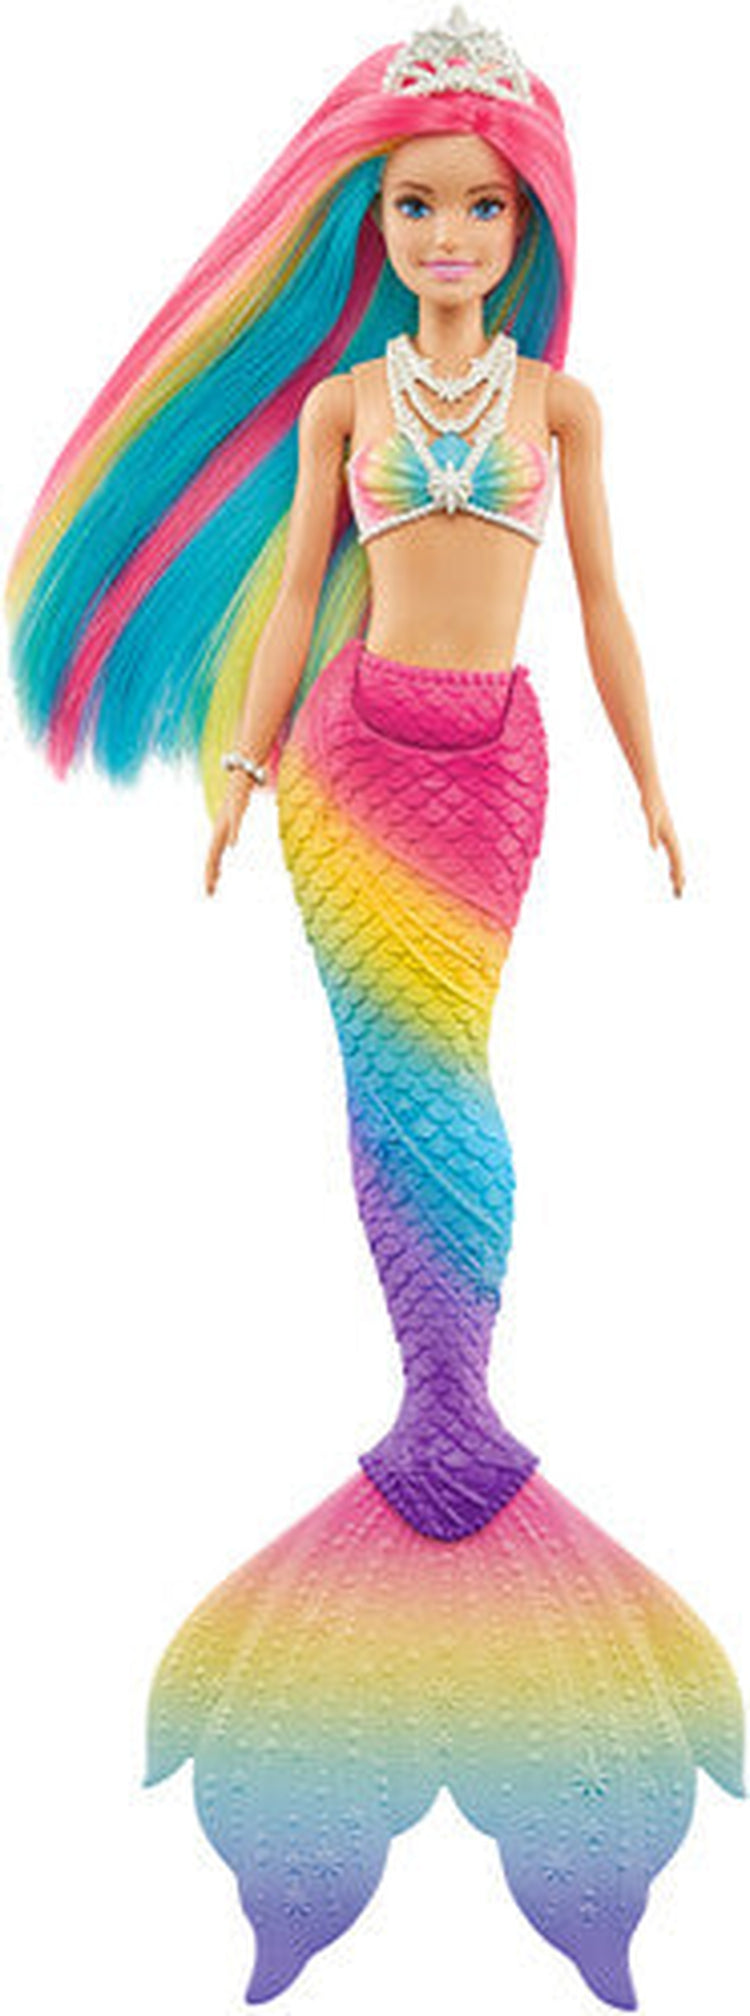 Mattel - Barbie Dreamtopia Rainbow Mermaid, Color Change